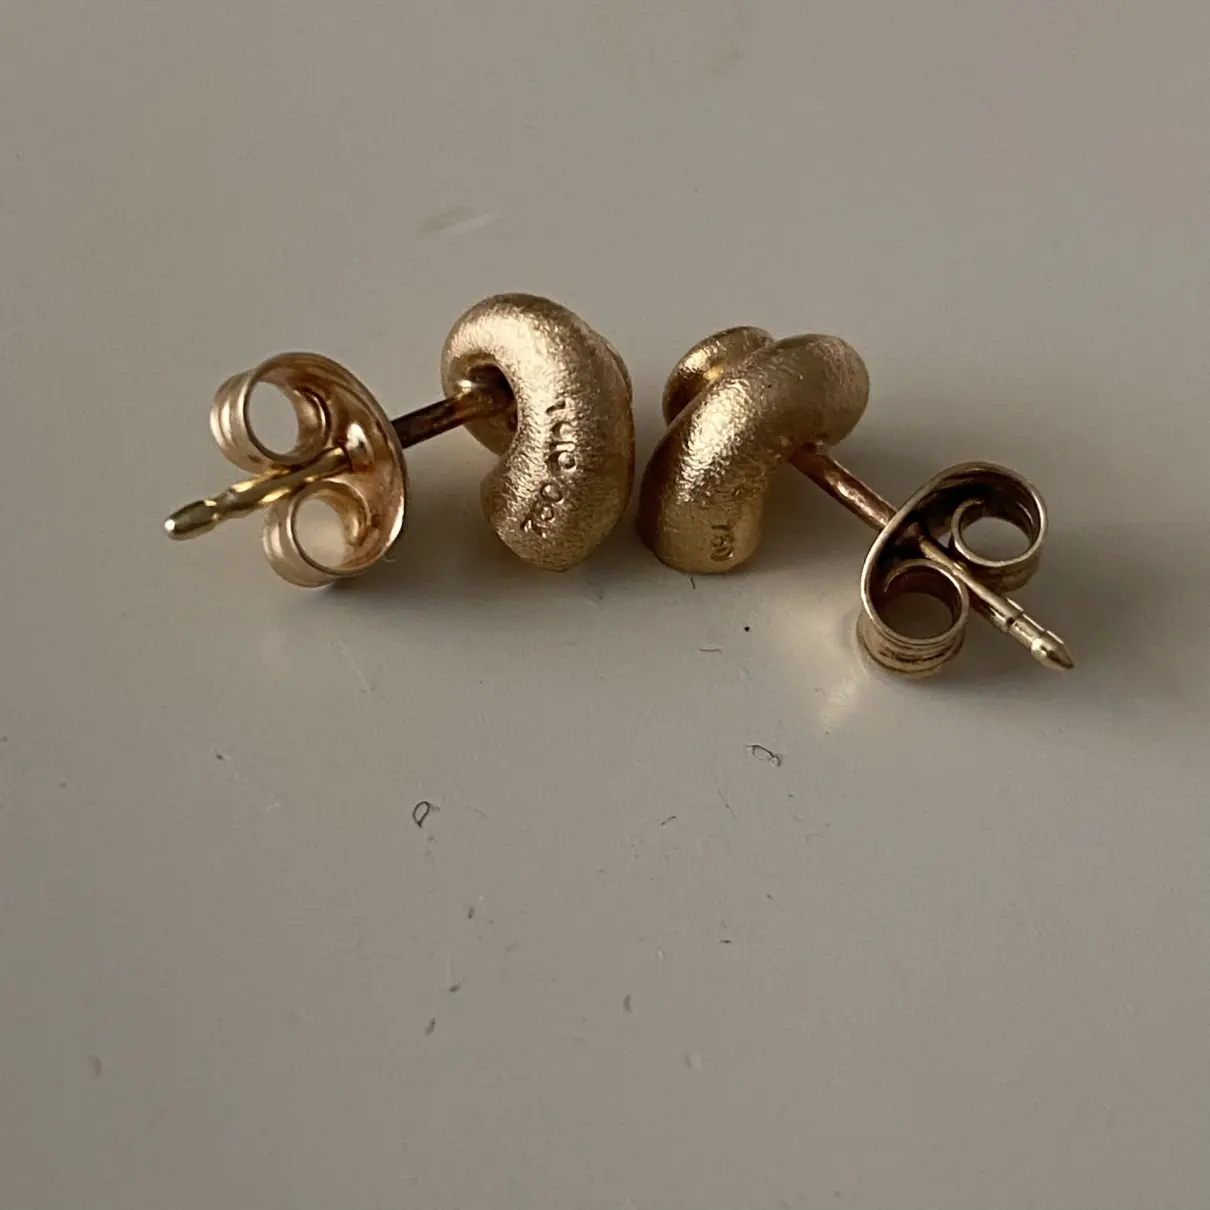 Buy Ole Lynggaard White gold earrings online